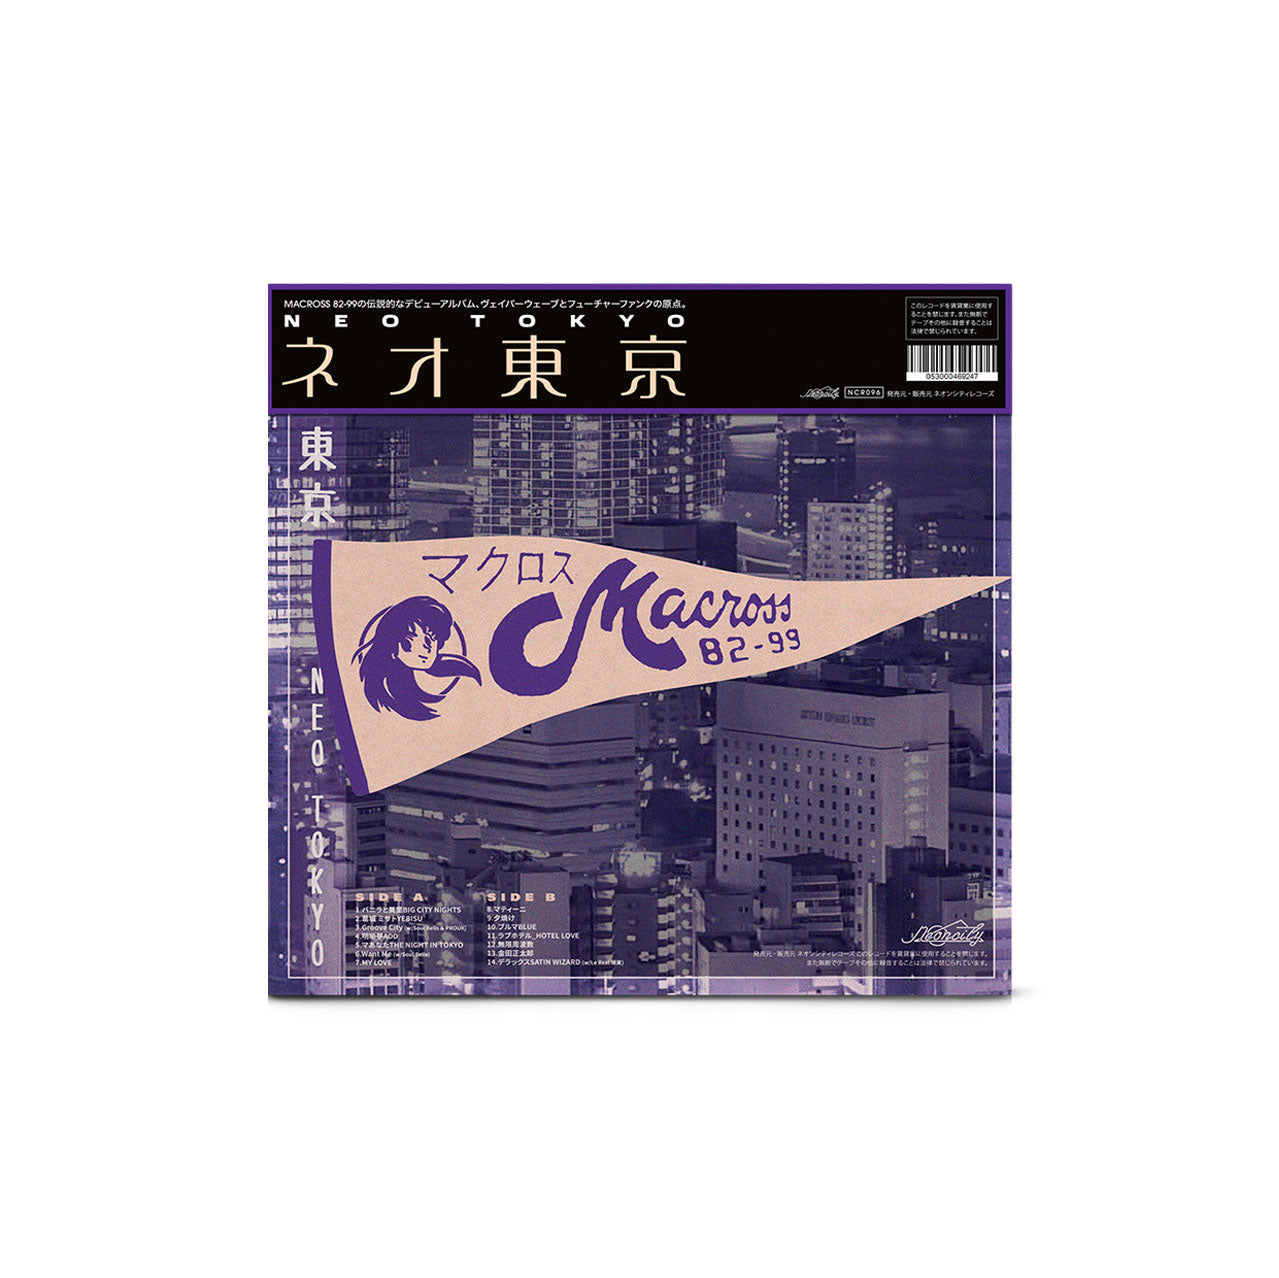 [Pre-order] Macross 82-99 - 'ネオ東京 (Neo Tokyo)' 12" Vinyl ("Midnight City" colorway) - Neoncity Records